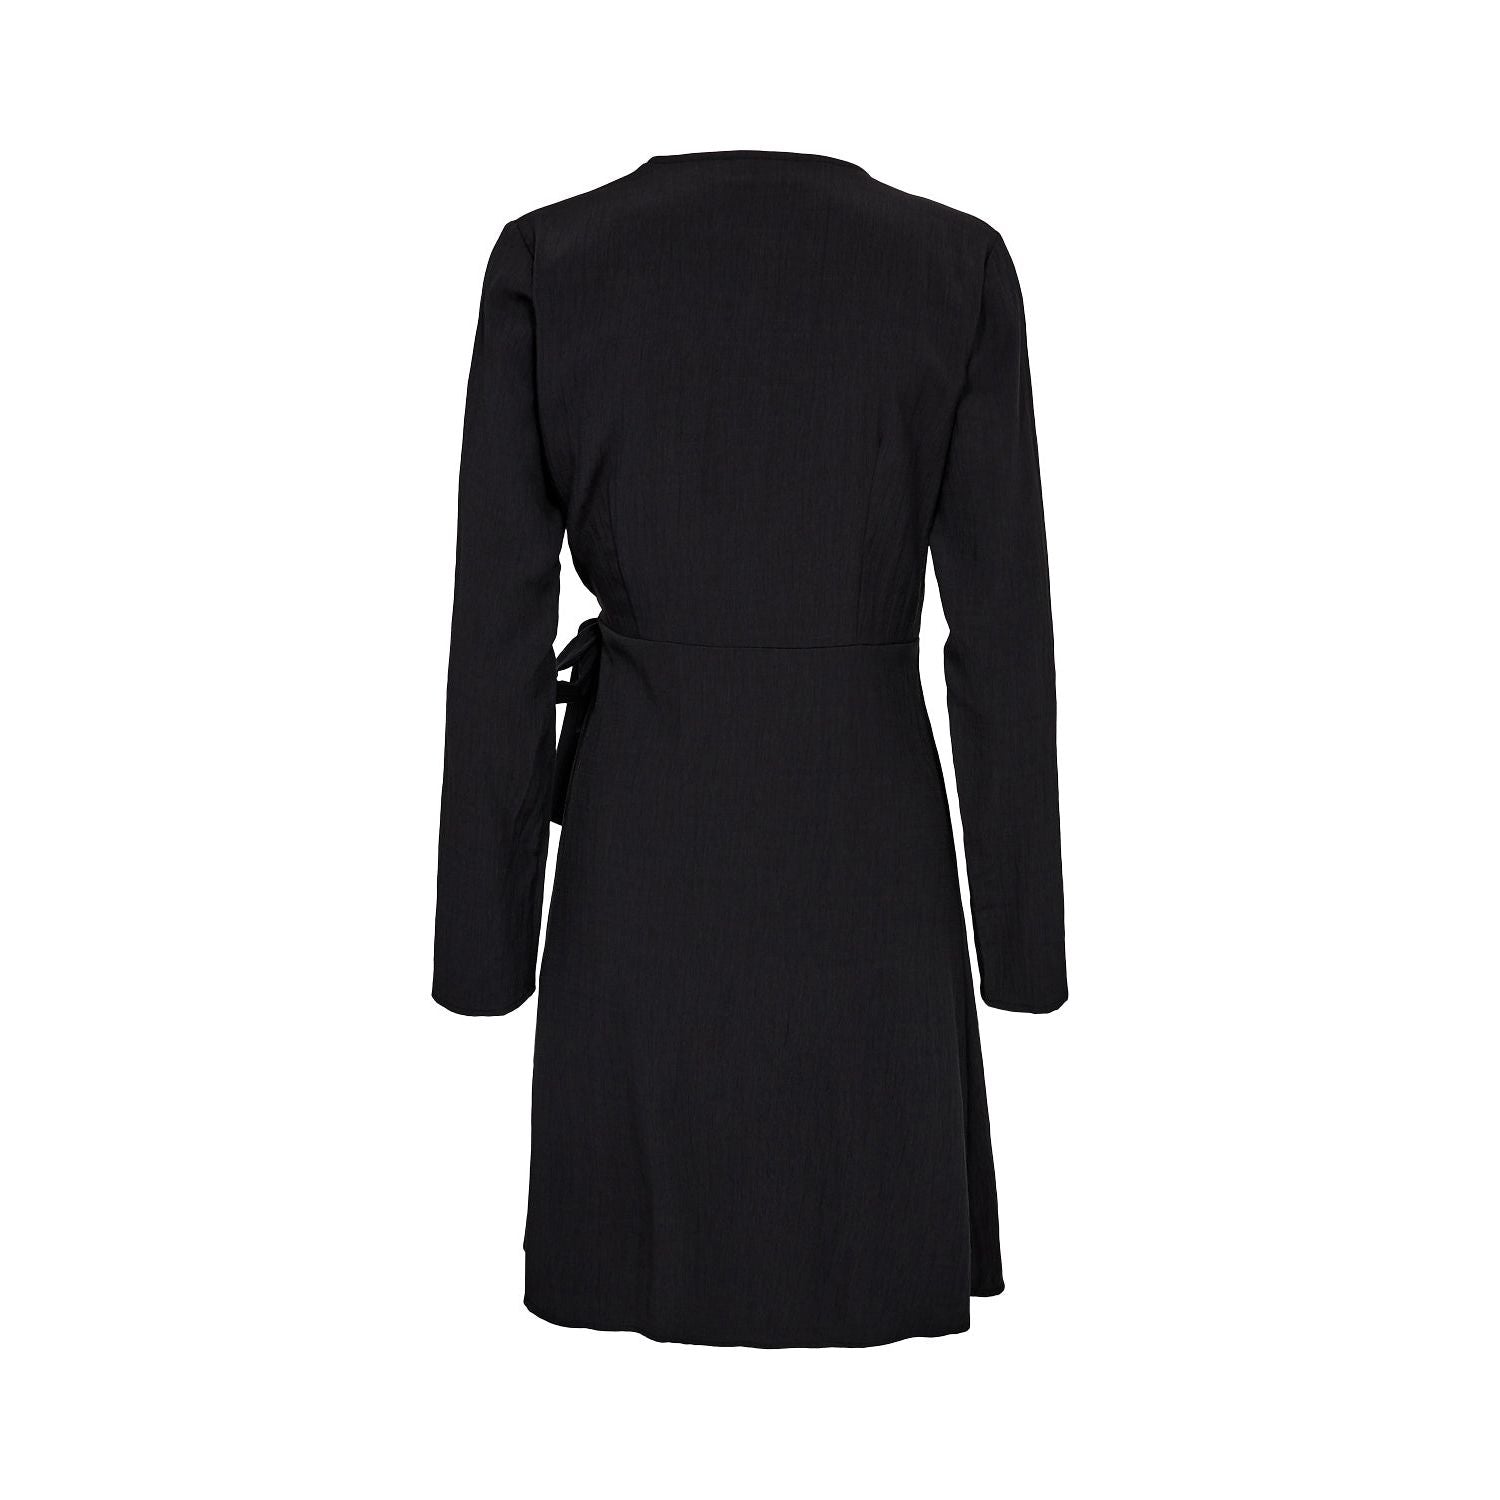 Minimum - Betties Short Dress in Black